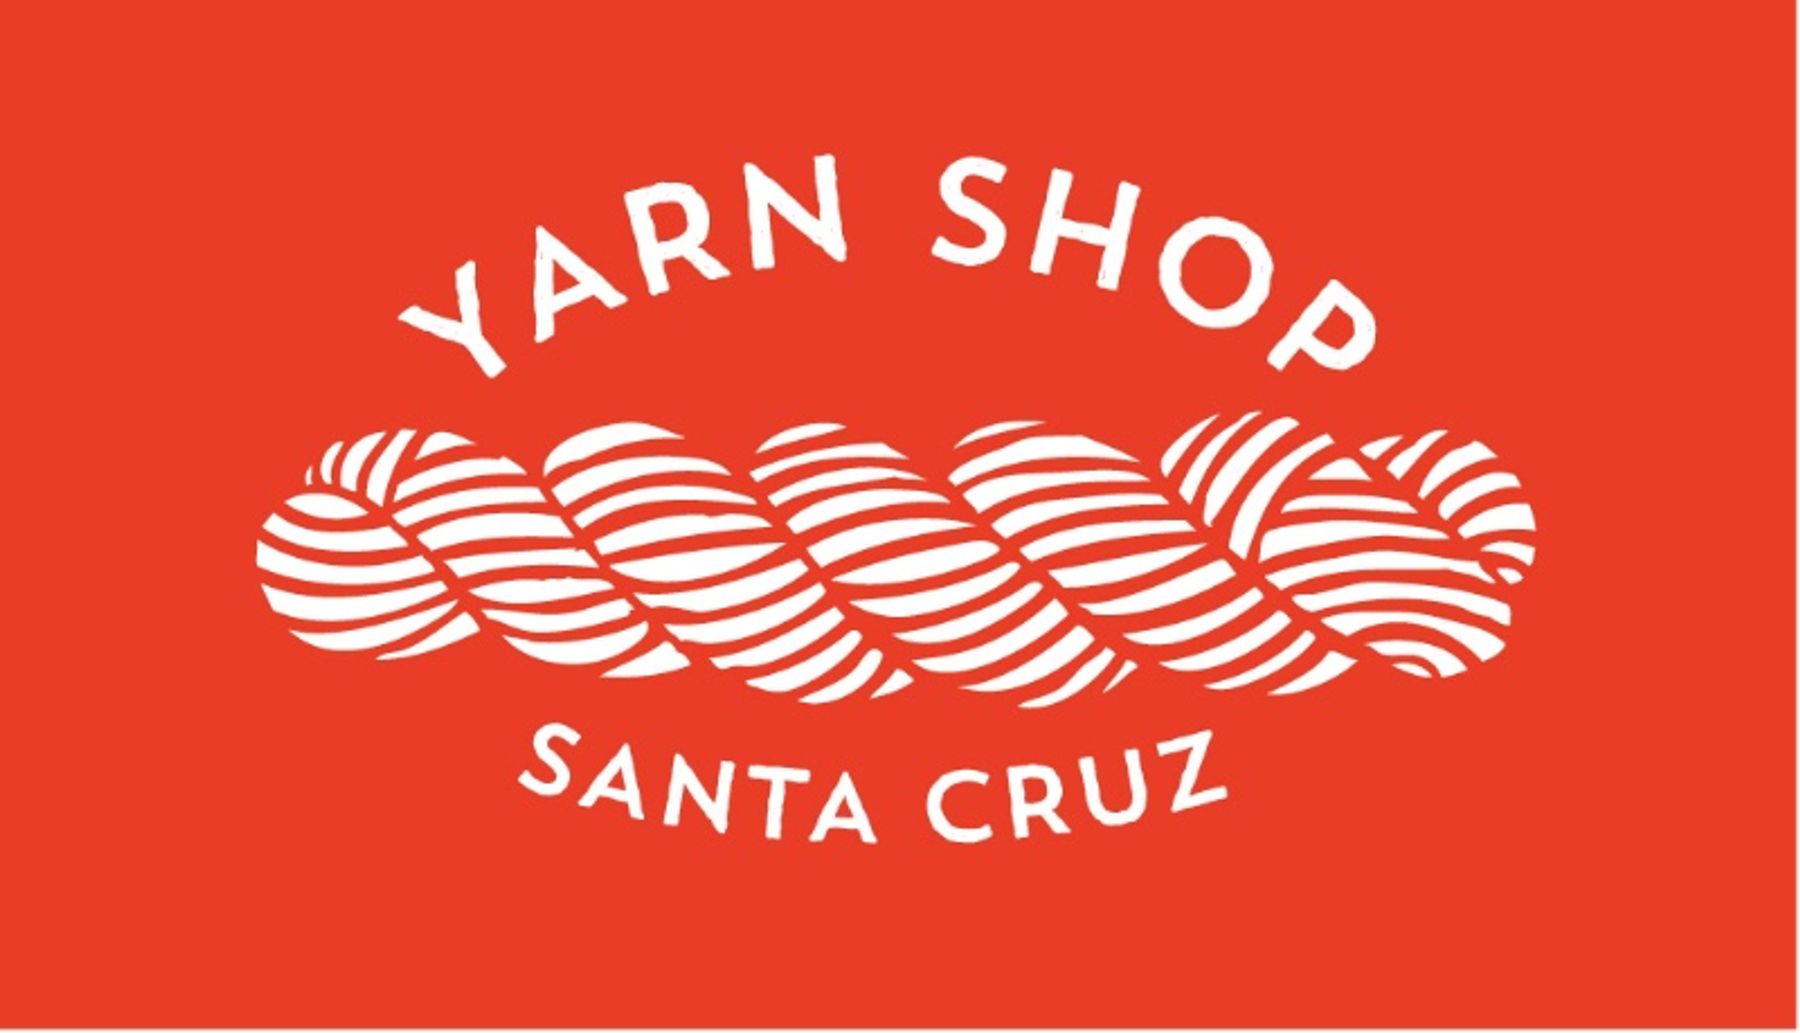 Yarn Shop Santa Cruz | Downtown Santa Cruz, CA